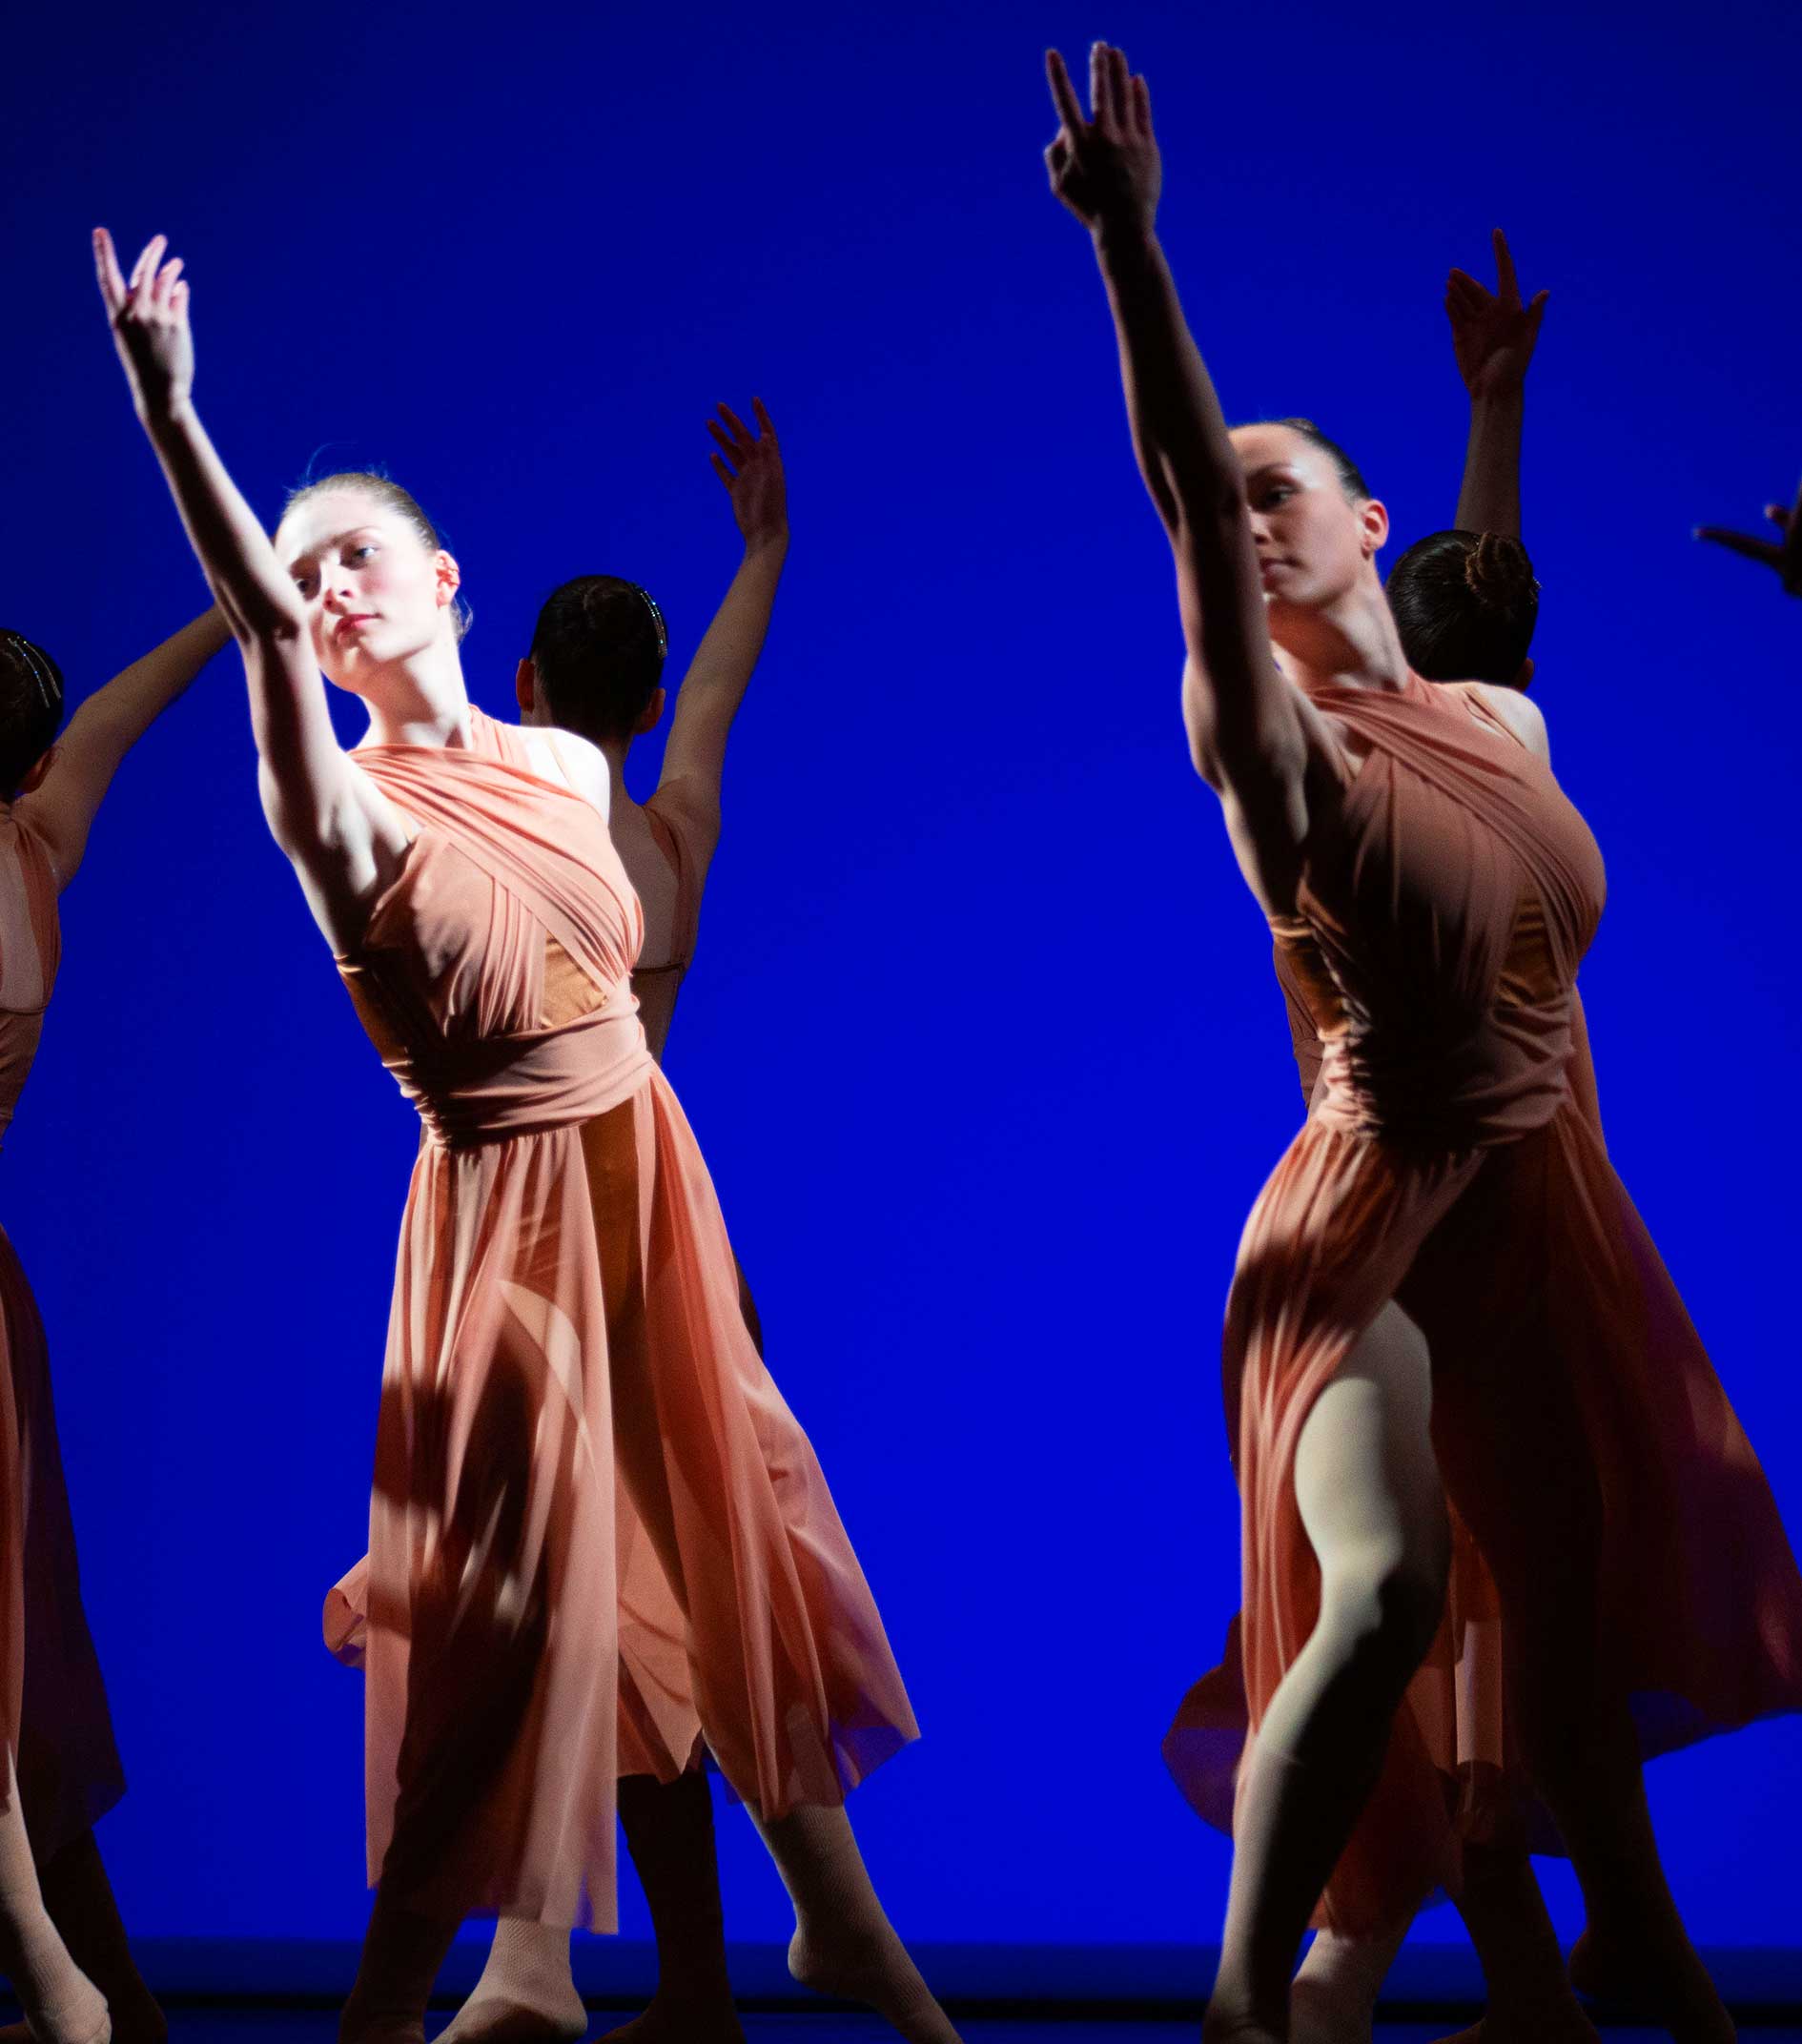 Lissy-G-Dance-Contemporary-Dance-ElisabethGoeppner-L'enfer-Theatercooperation-JosephineSauerhoefer-PaulaSinger-BarclelonaCityBallet-web.jpg